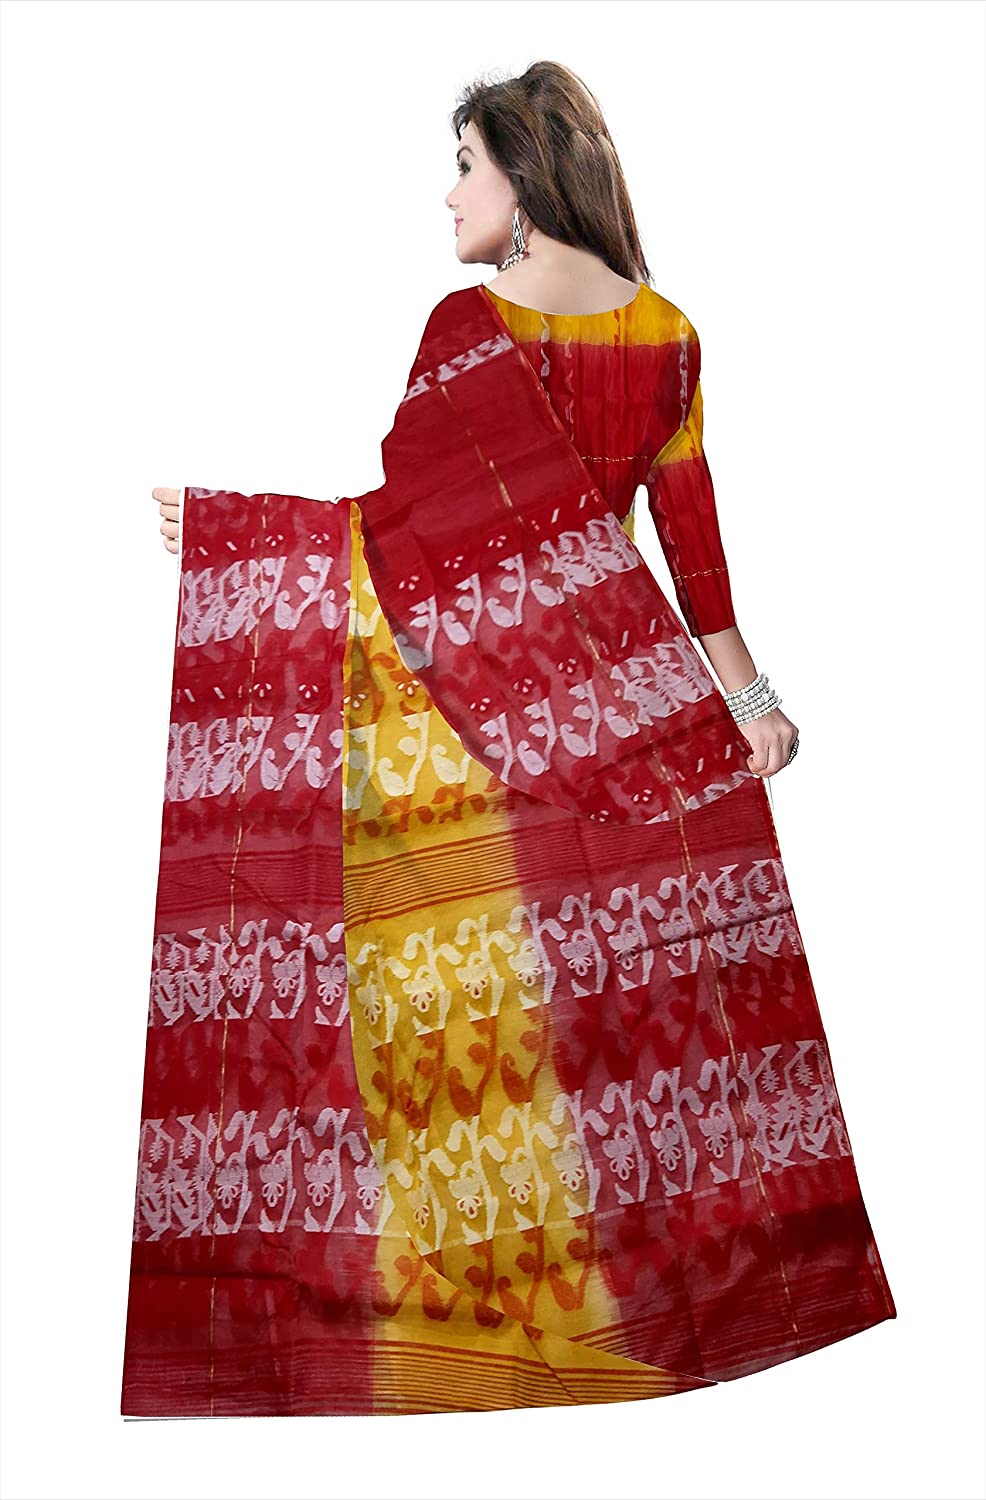 Pradip Fabrics Ethnic Women's Cotton Tant Gap Jamani Red and Yellow Color Saree